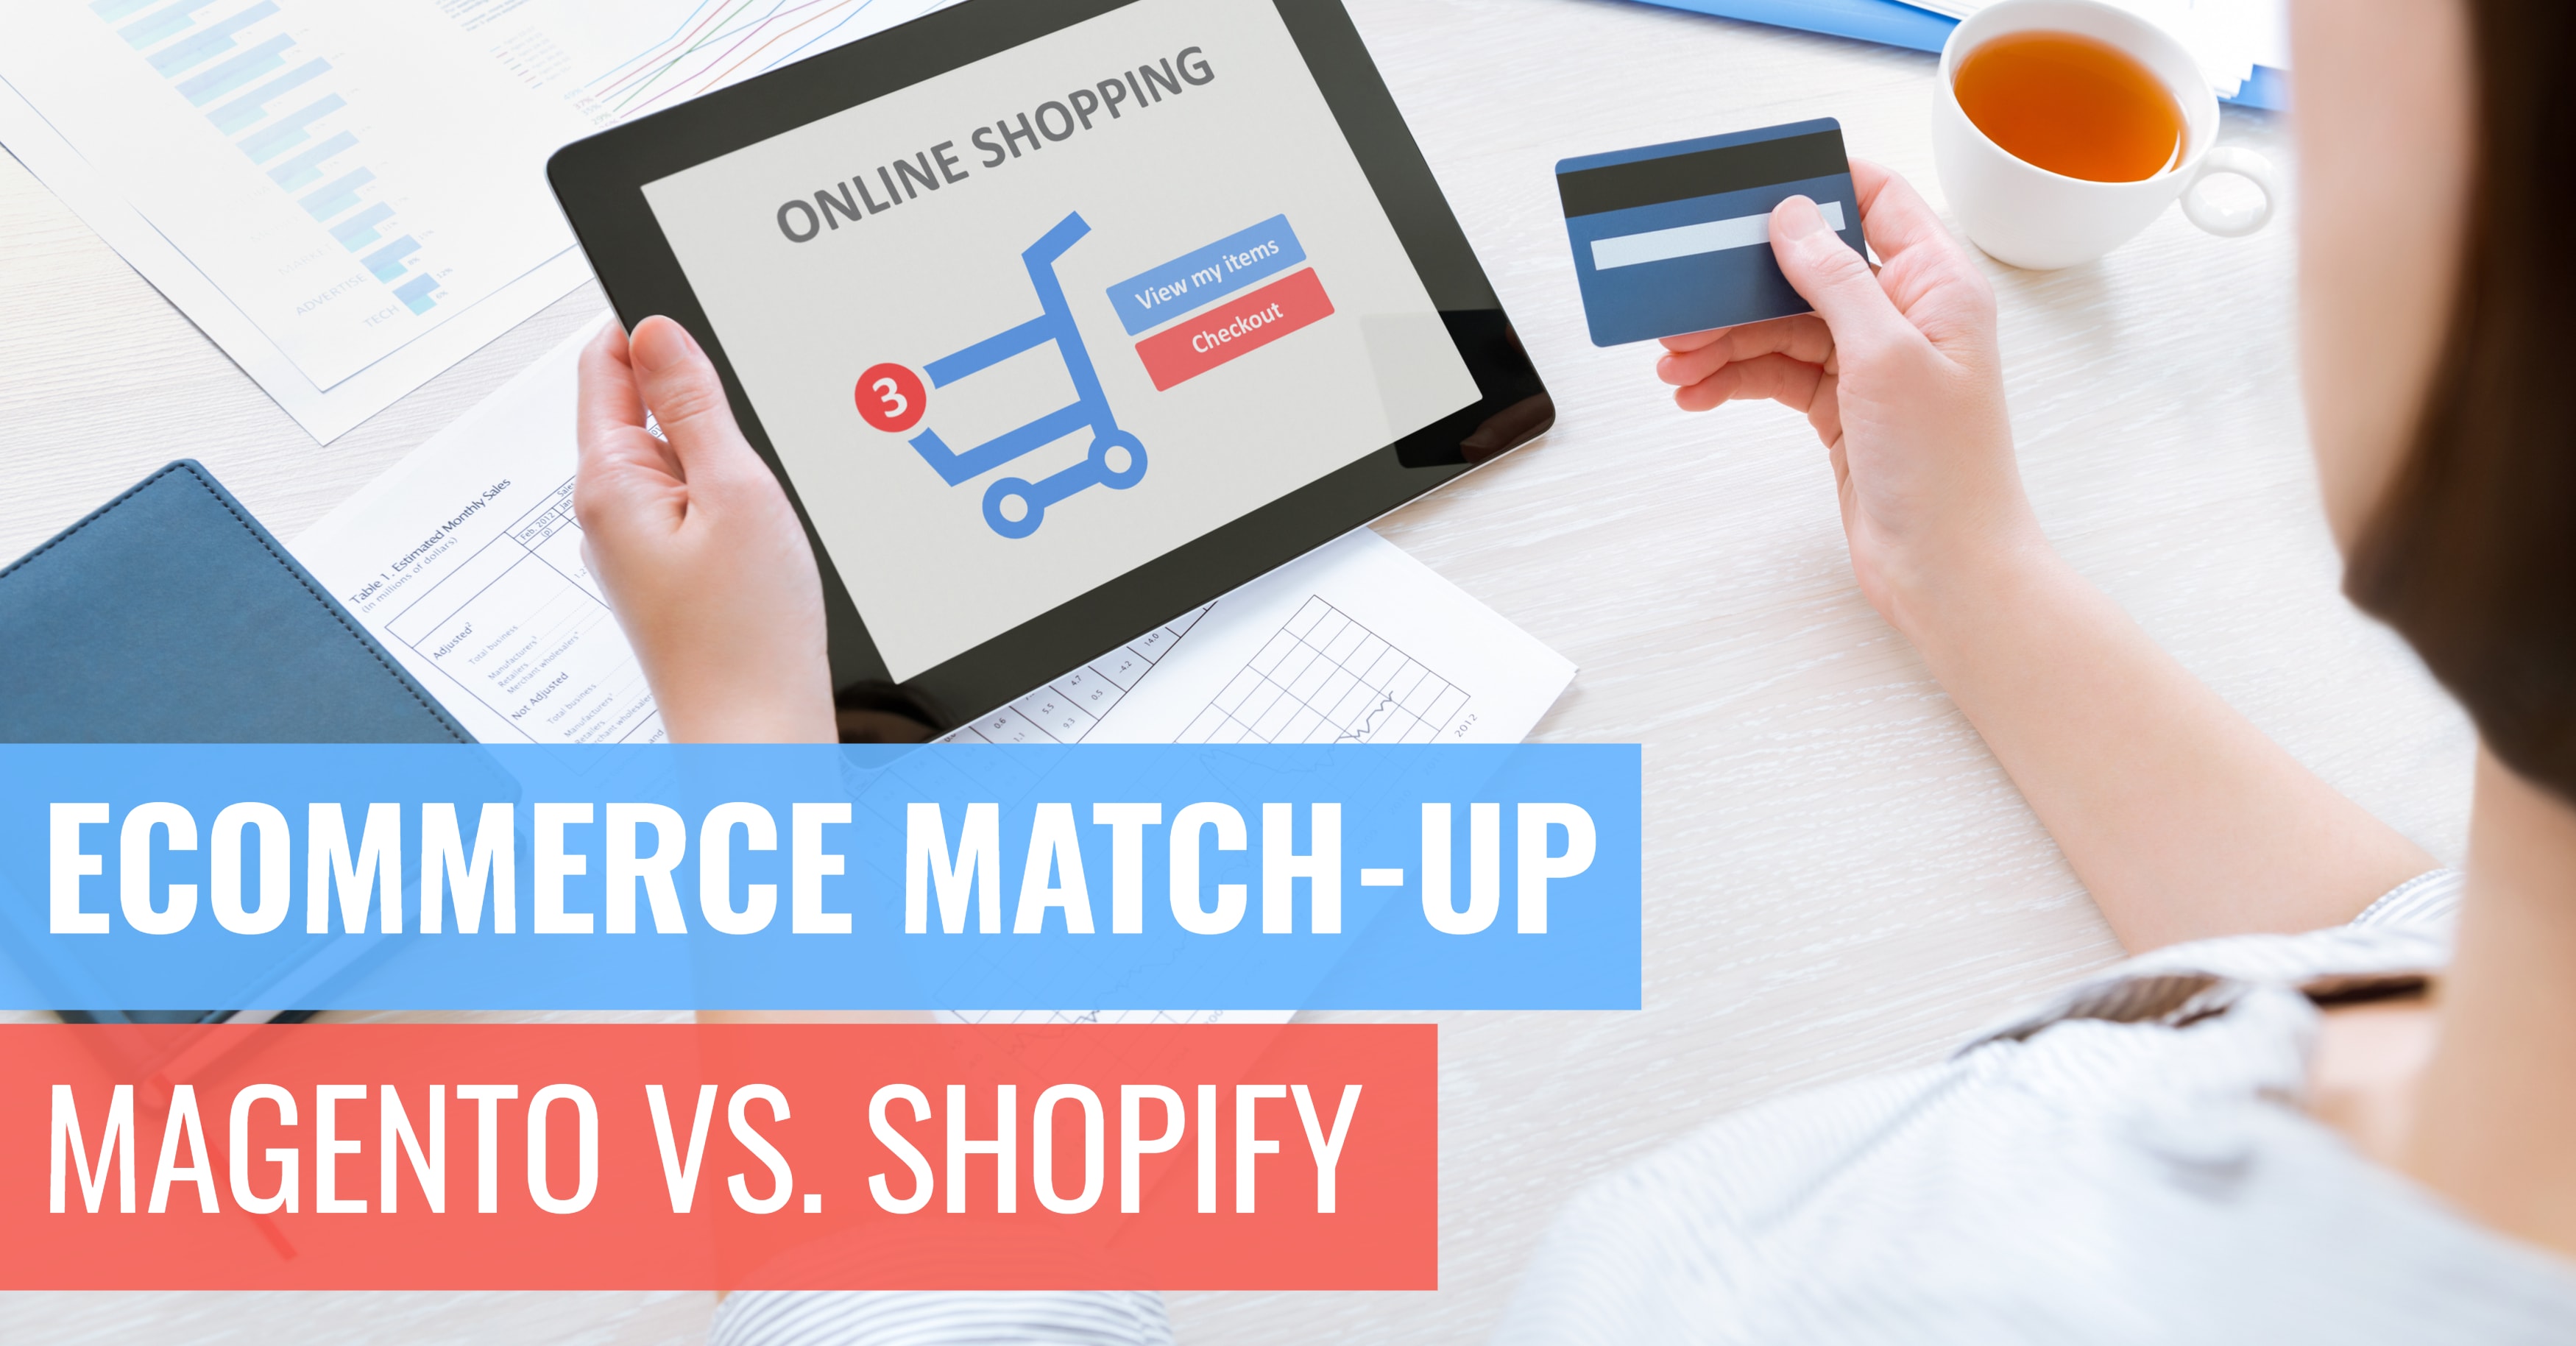 magento vs shopify pricing reddit